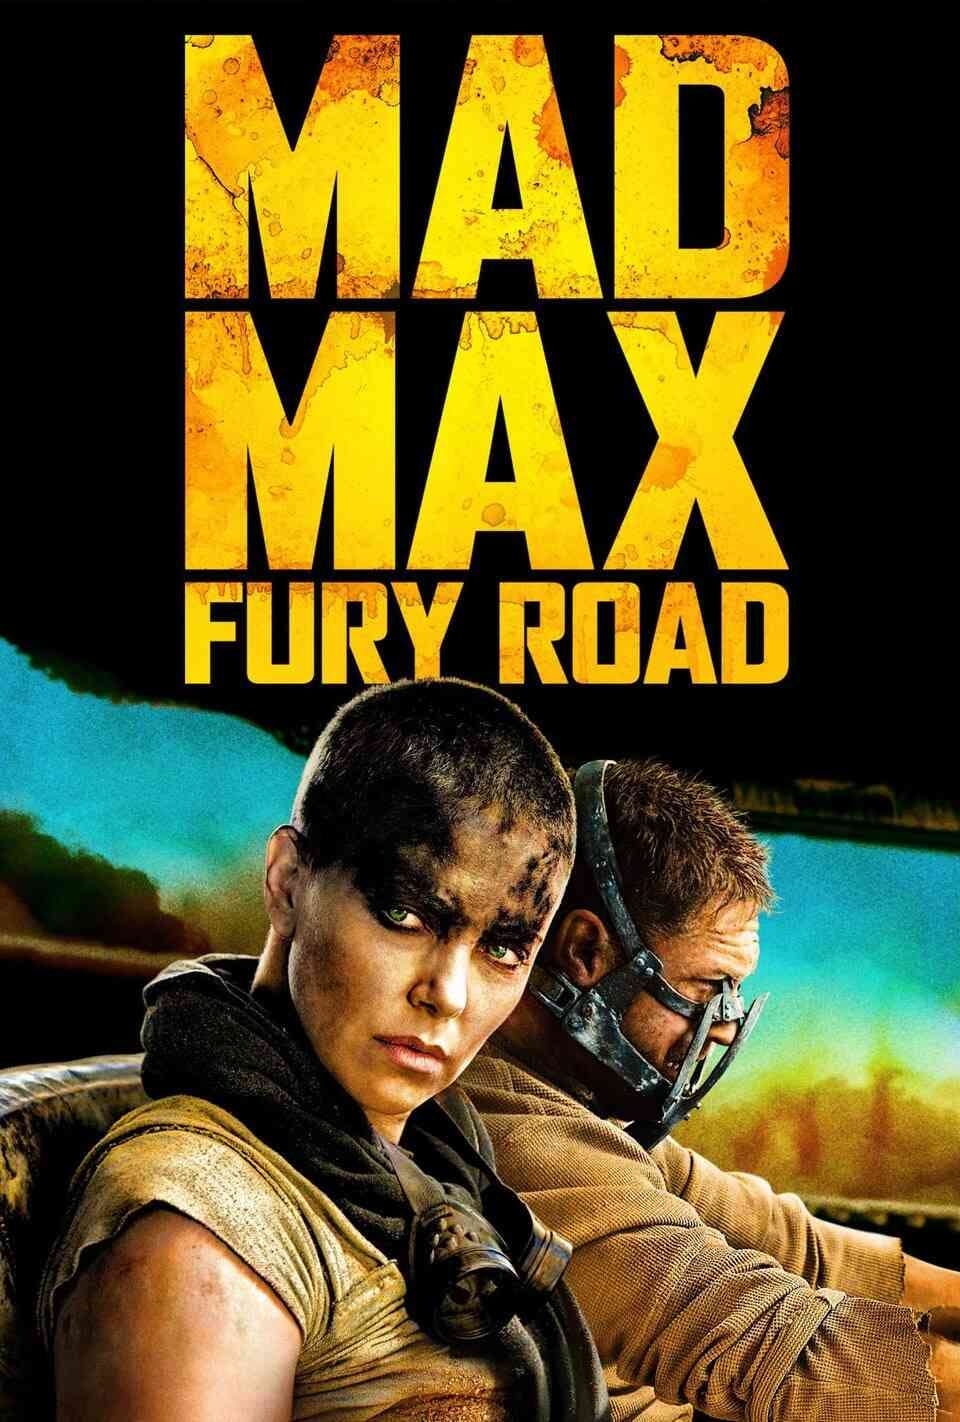 Read Fury Road screenplay (poster)